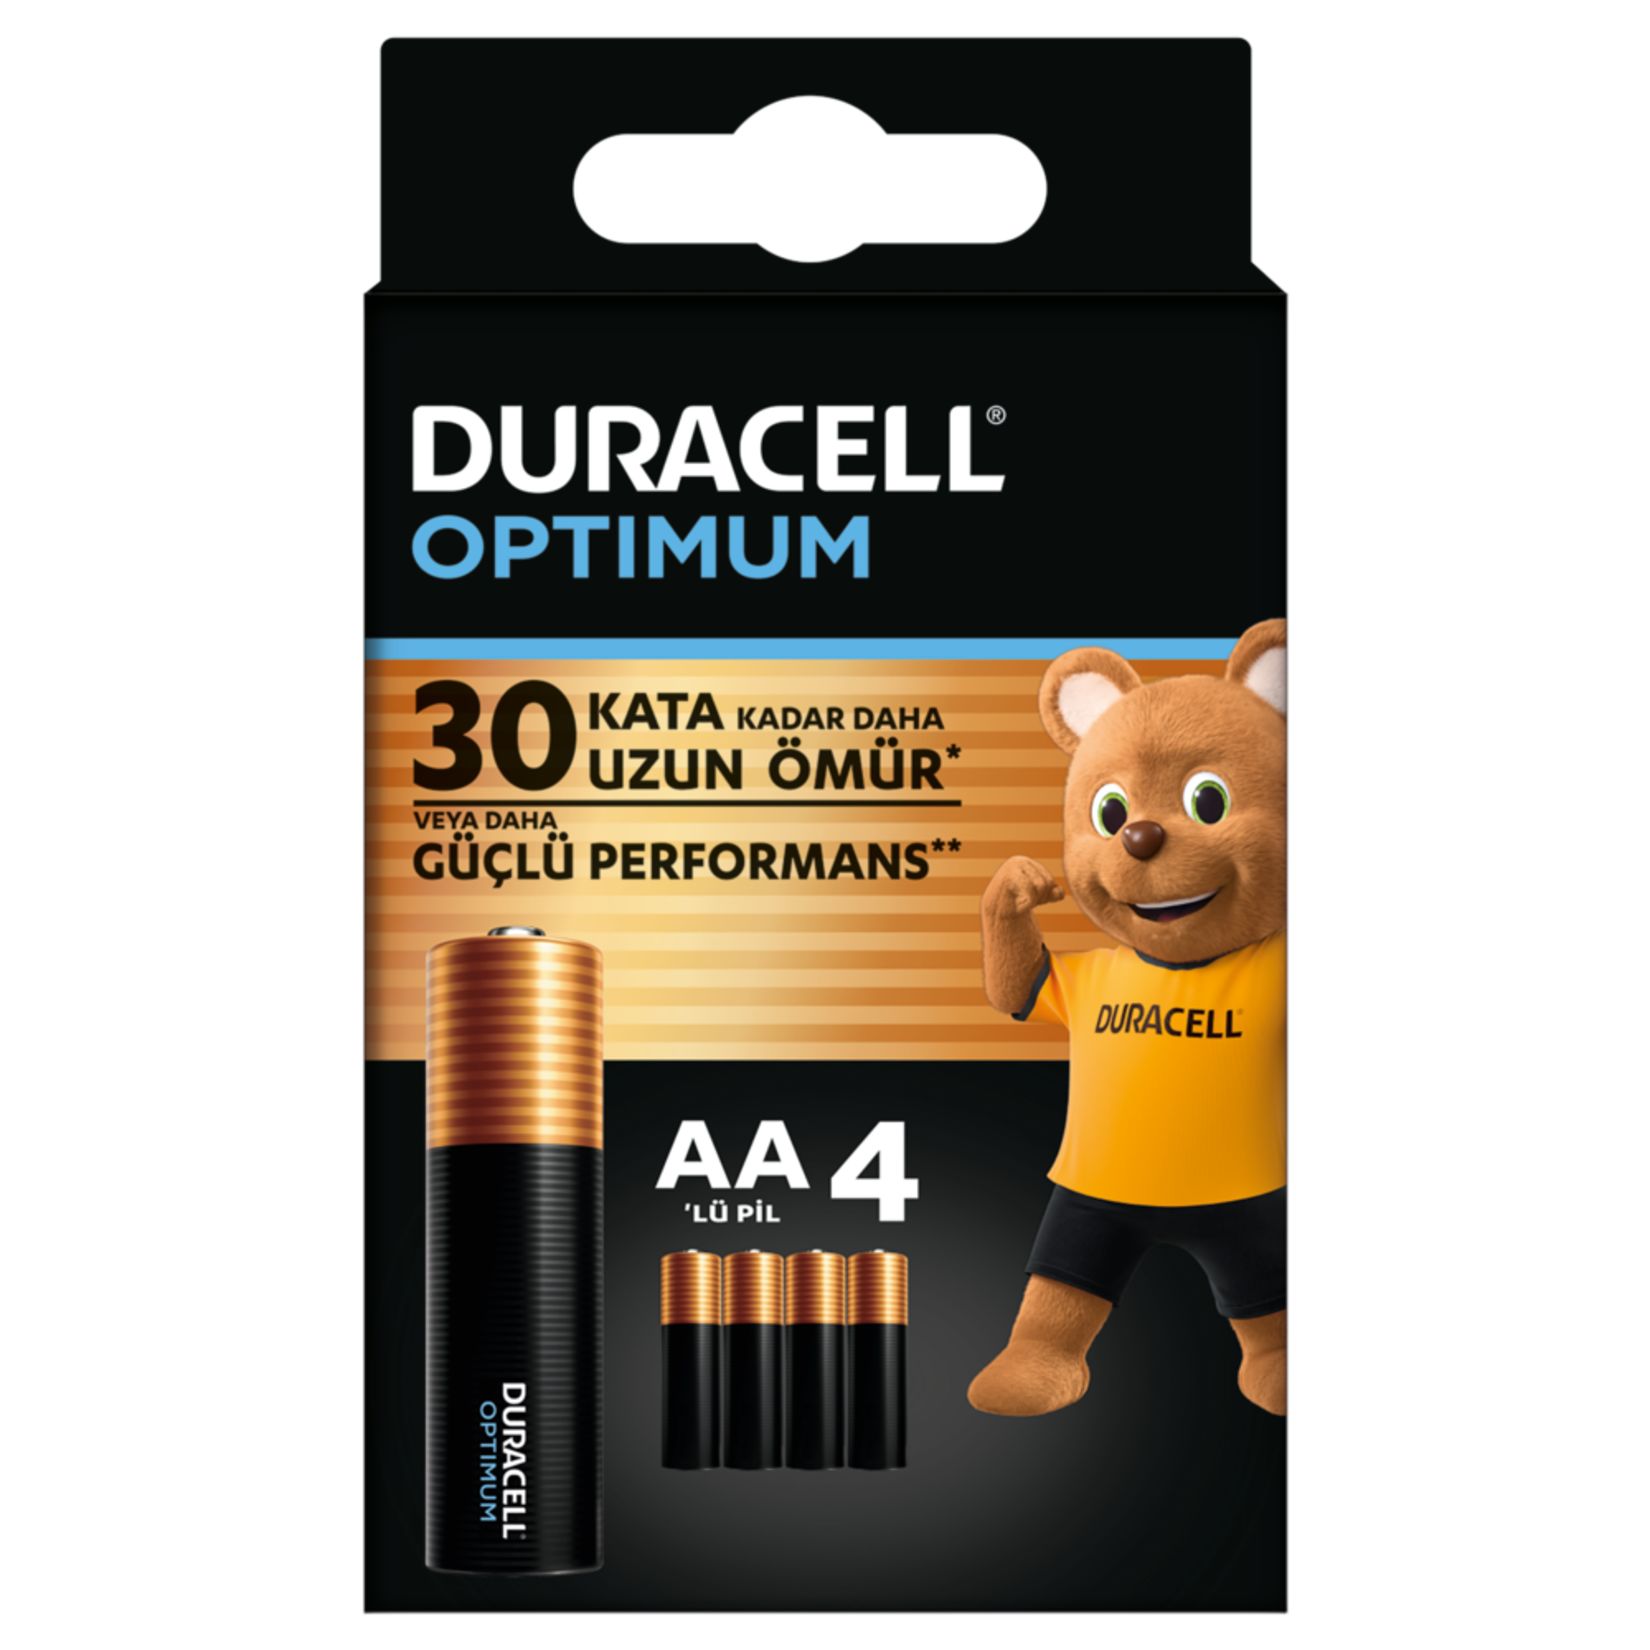 Duracell Optimum AA Alkalin Kalem Pil, 1,5V, 4’lü Paket